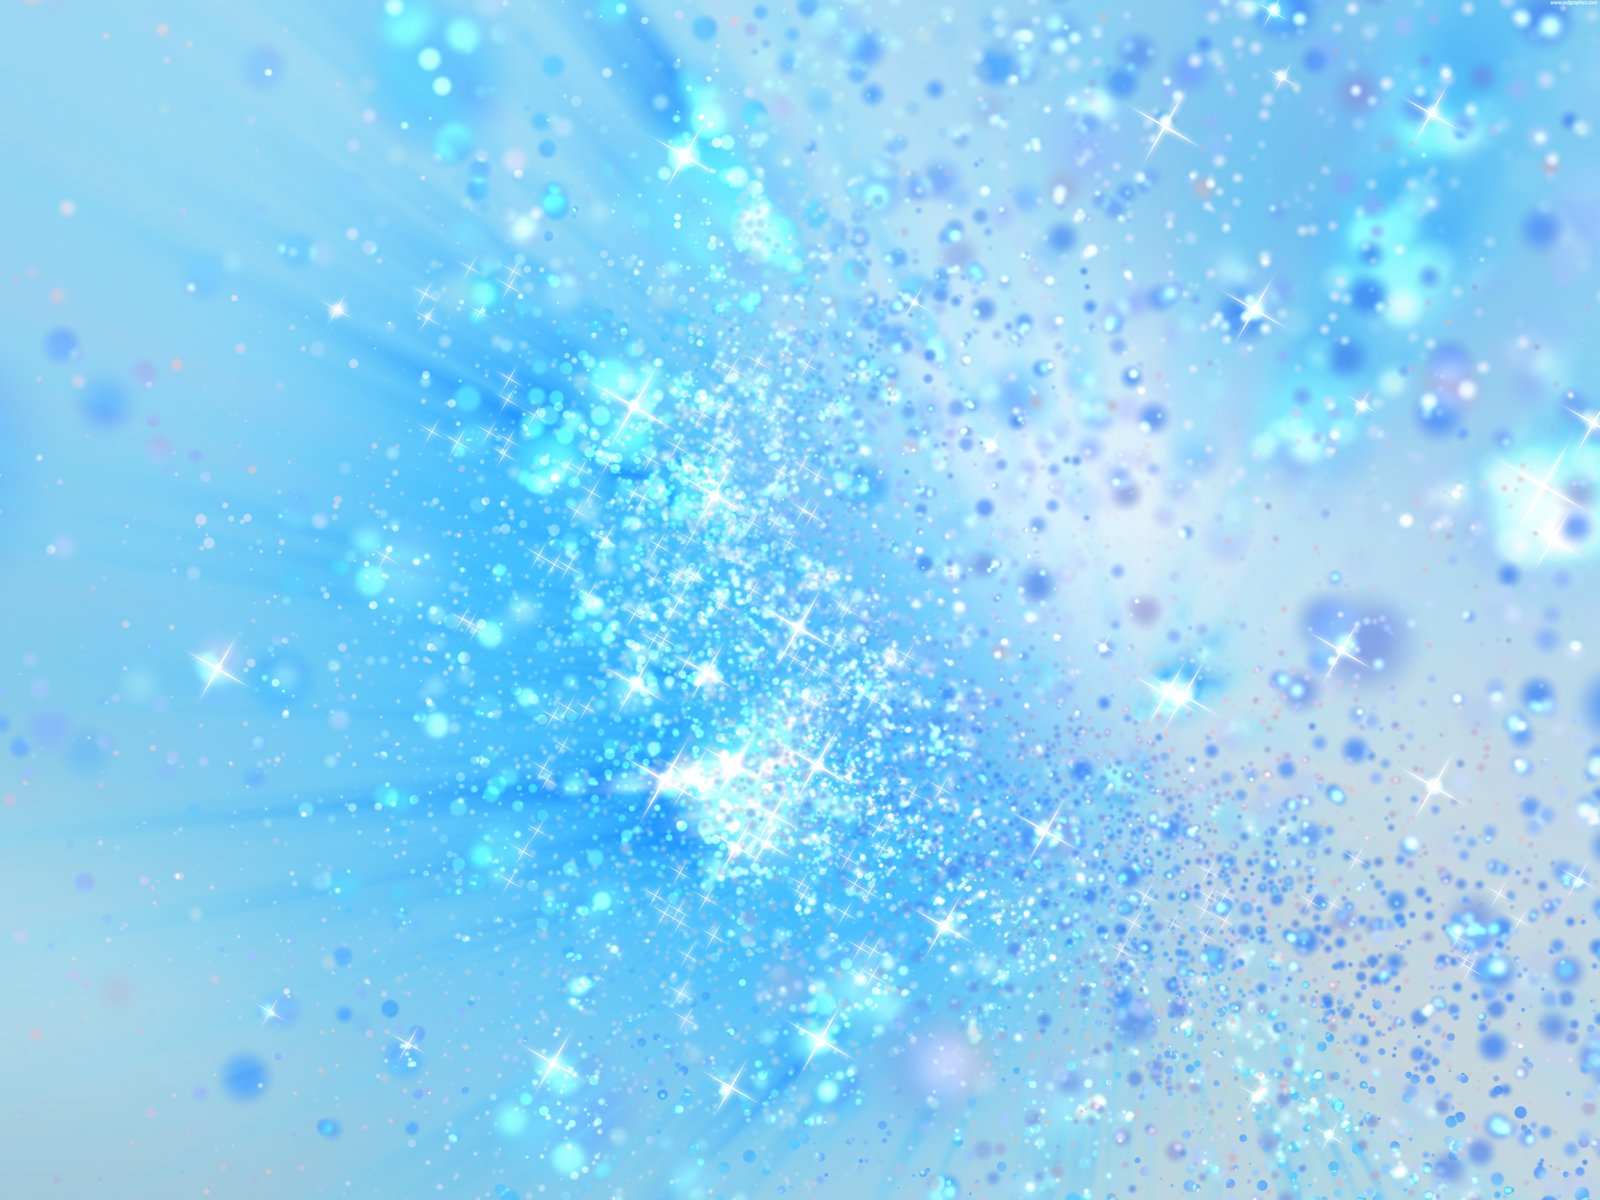 Blue magic dust background - PSDgraphics